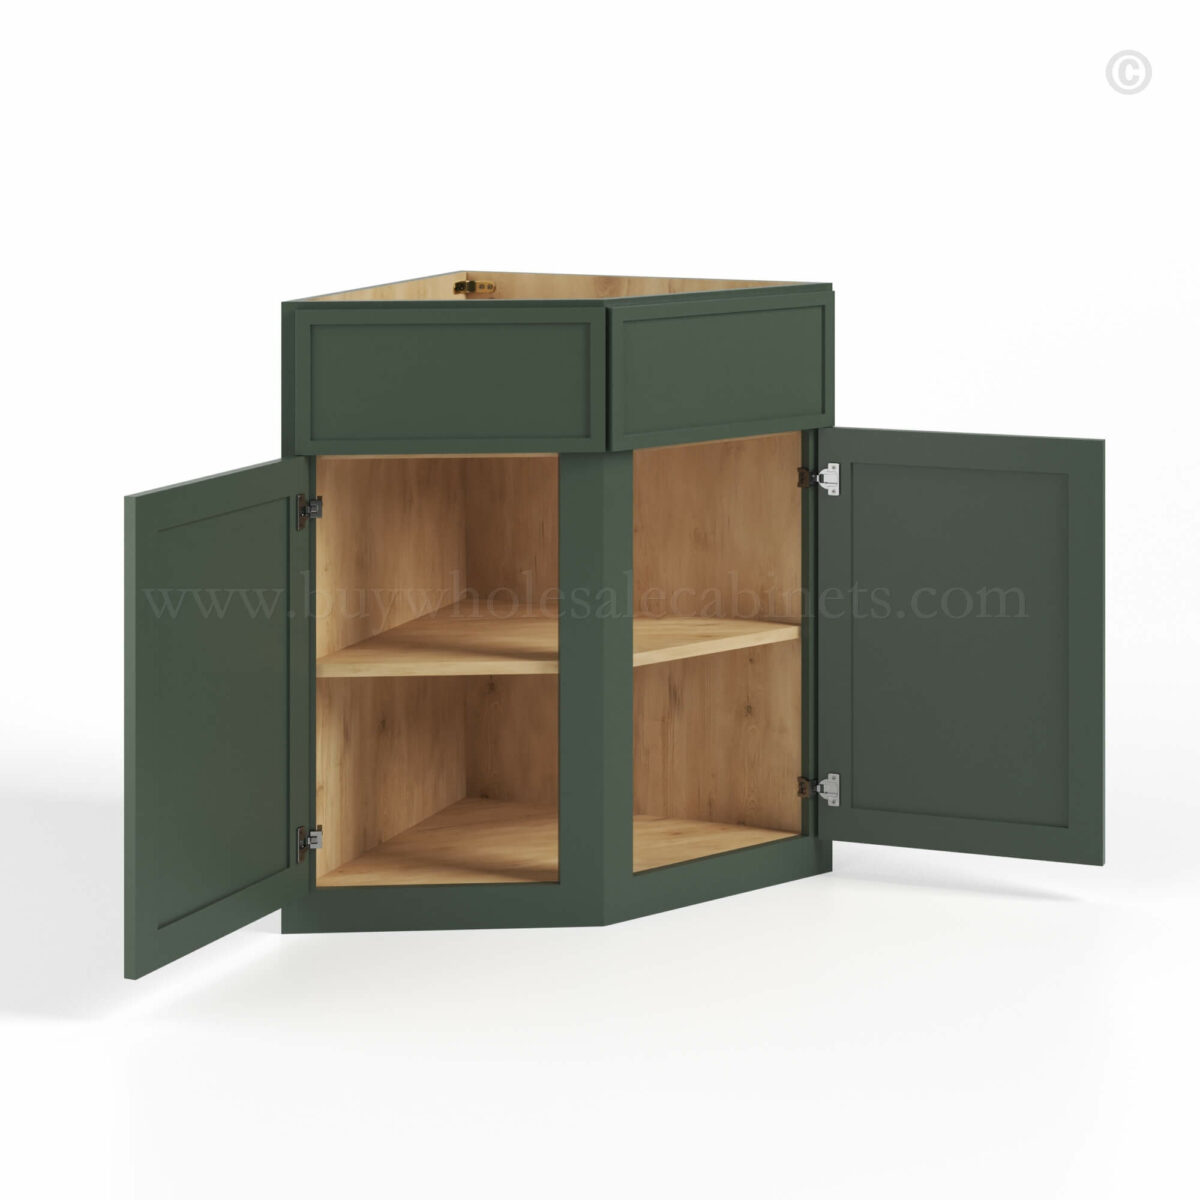 Slim Shaker Green Base End Corner Cabinet, rta cabinets, wholesale cabinets